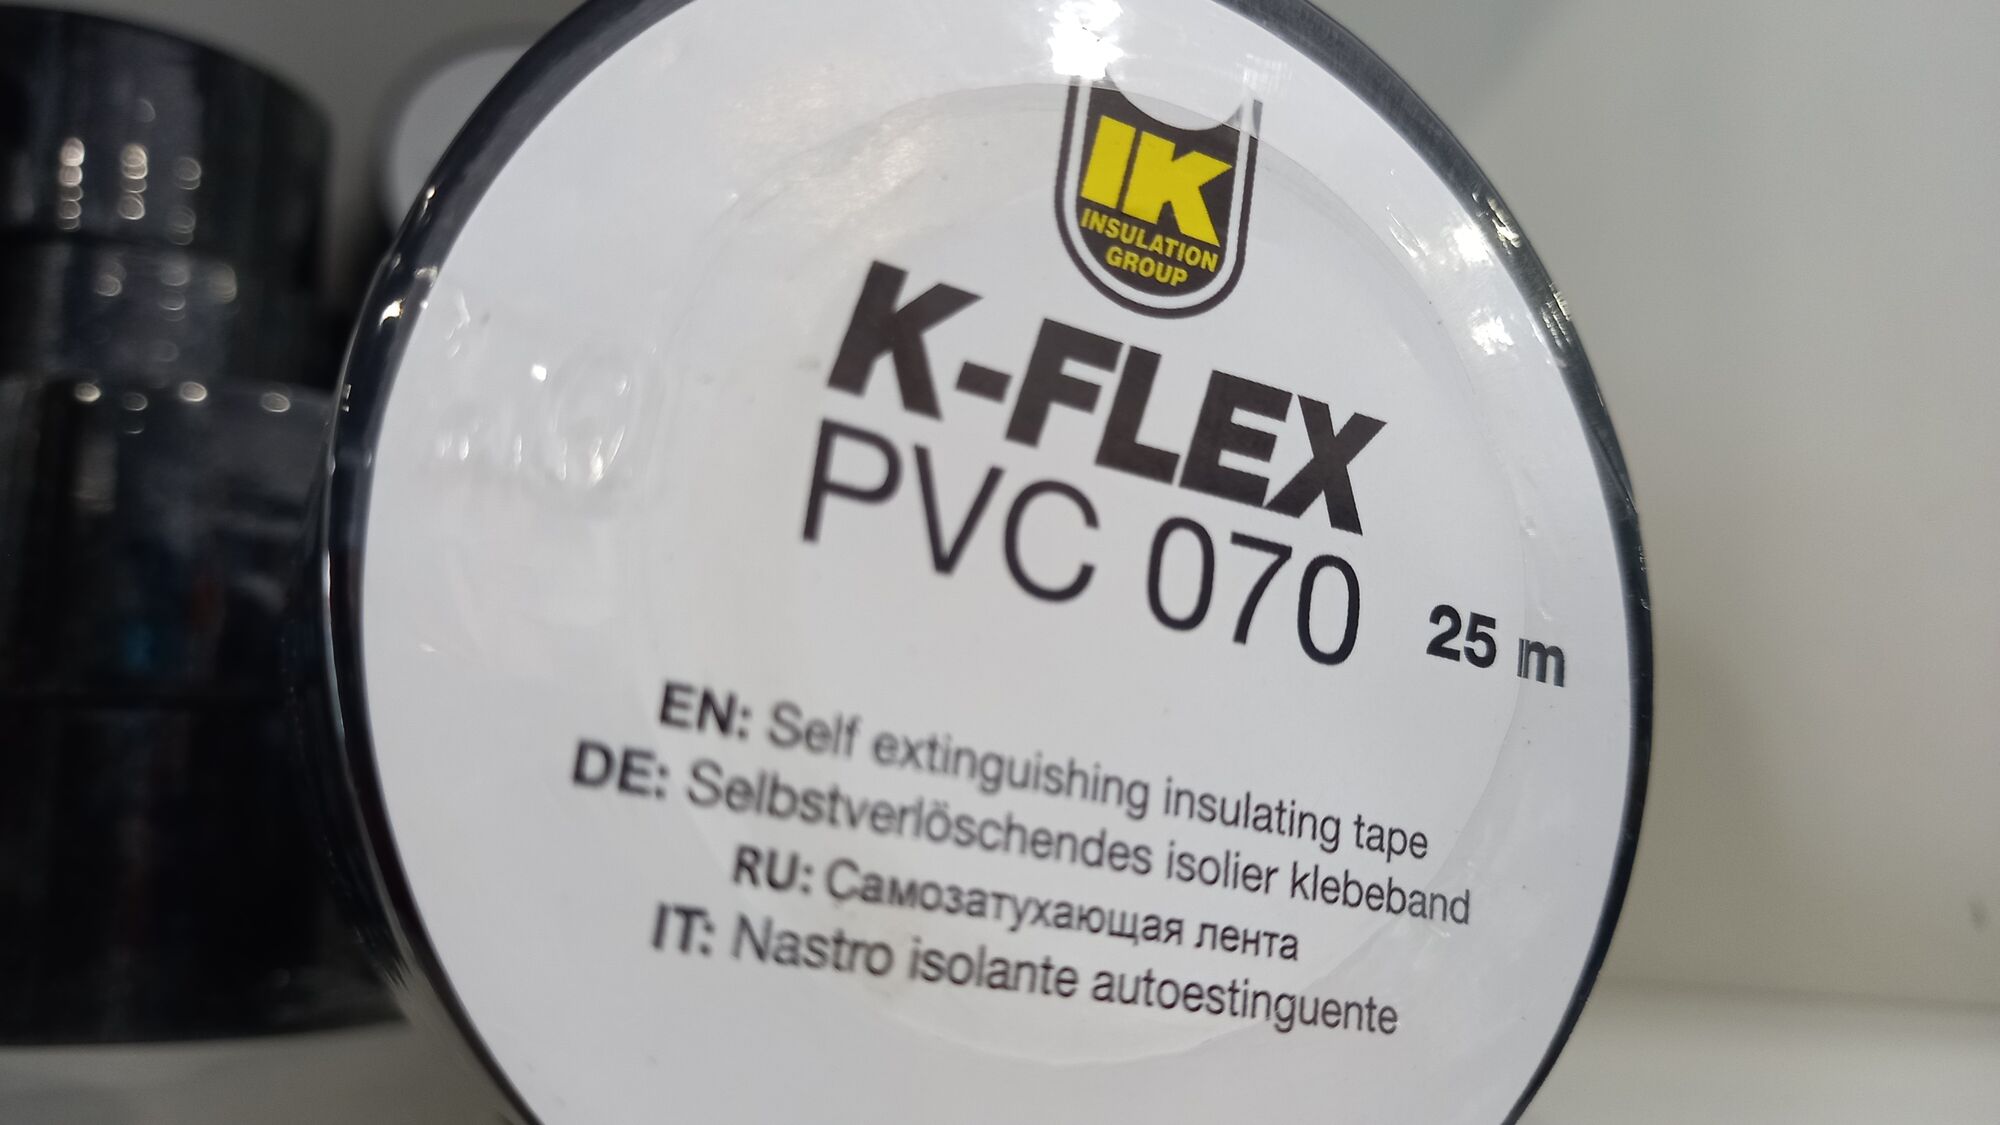 Лента k-Flex 050-025 PVC at 070 Black. Маркировку к-флекса. Лента ПВХ 50ммх50м черная. K flex pvc